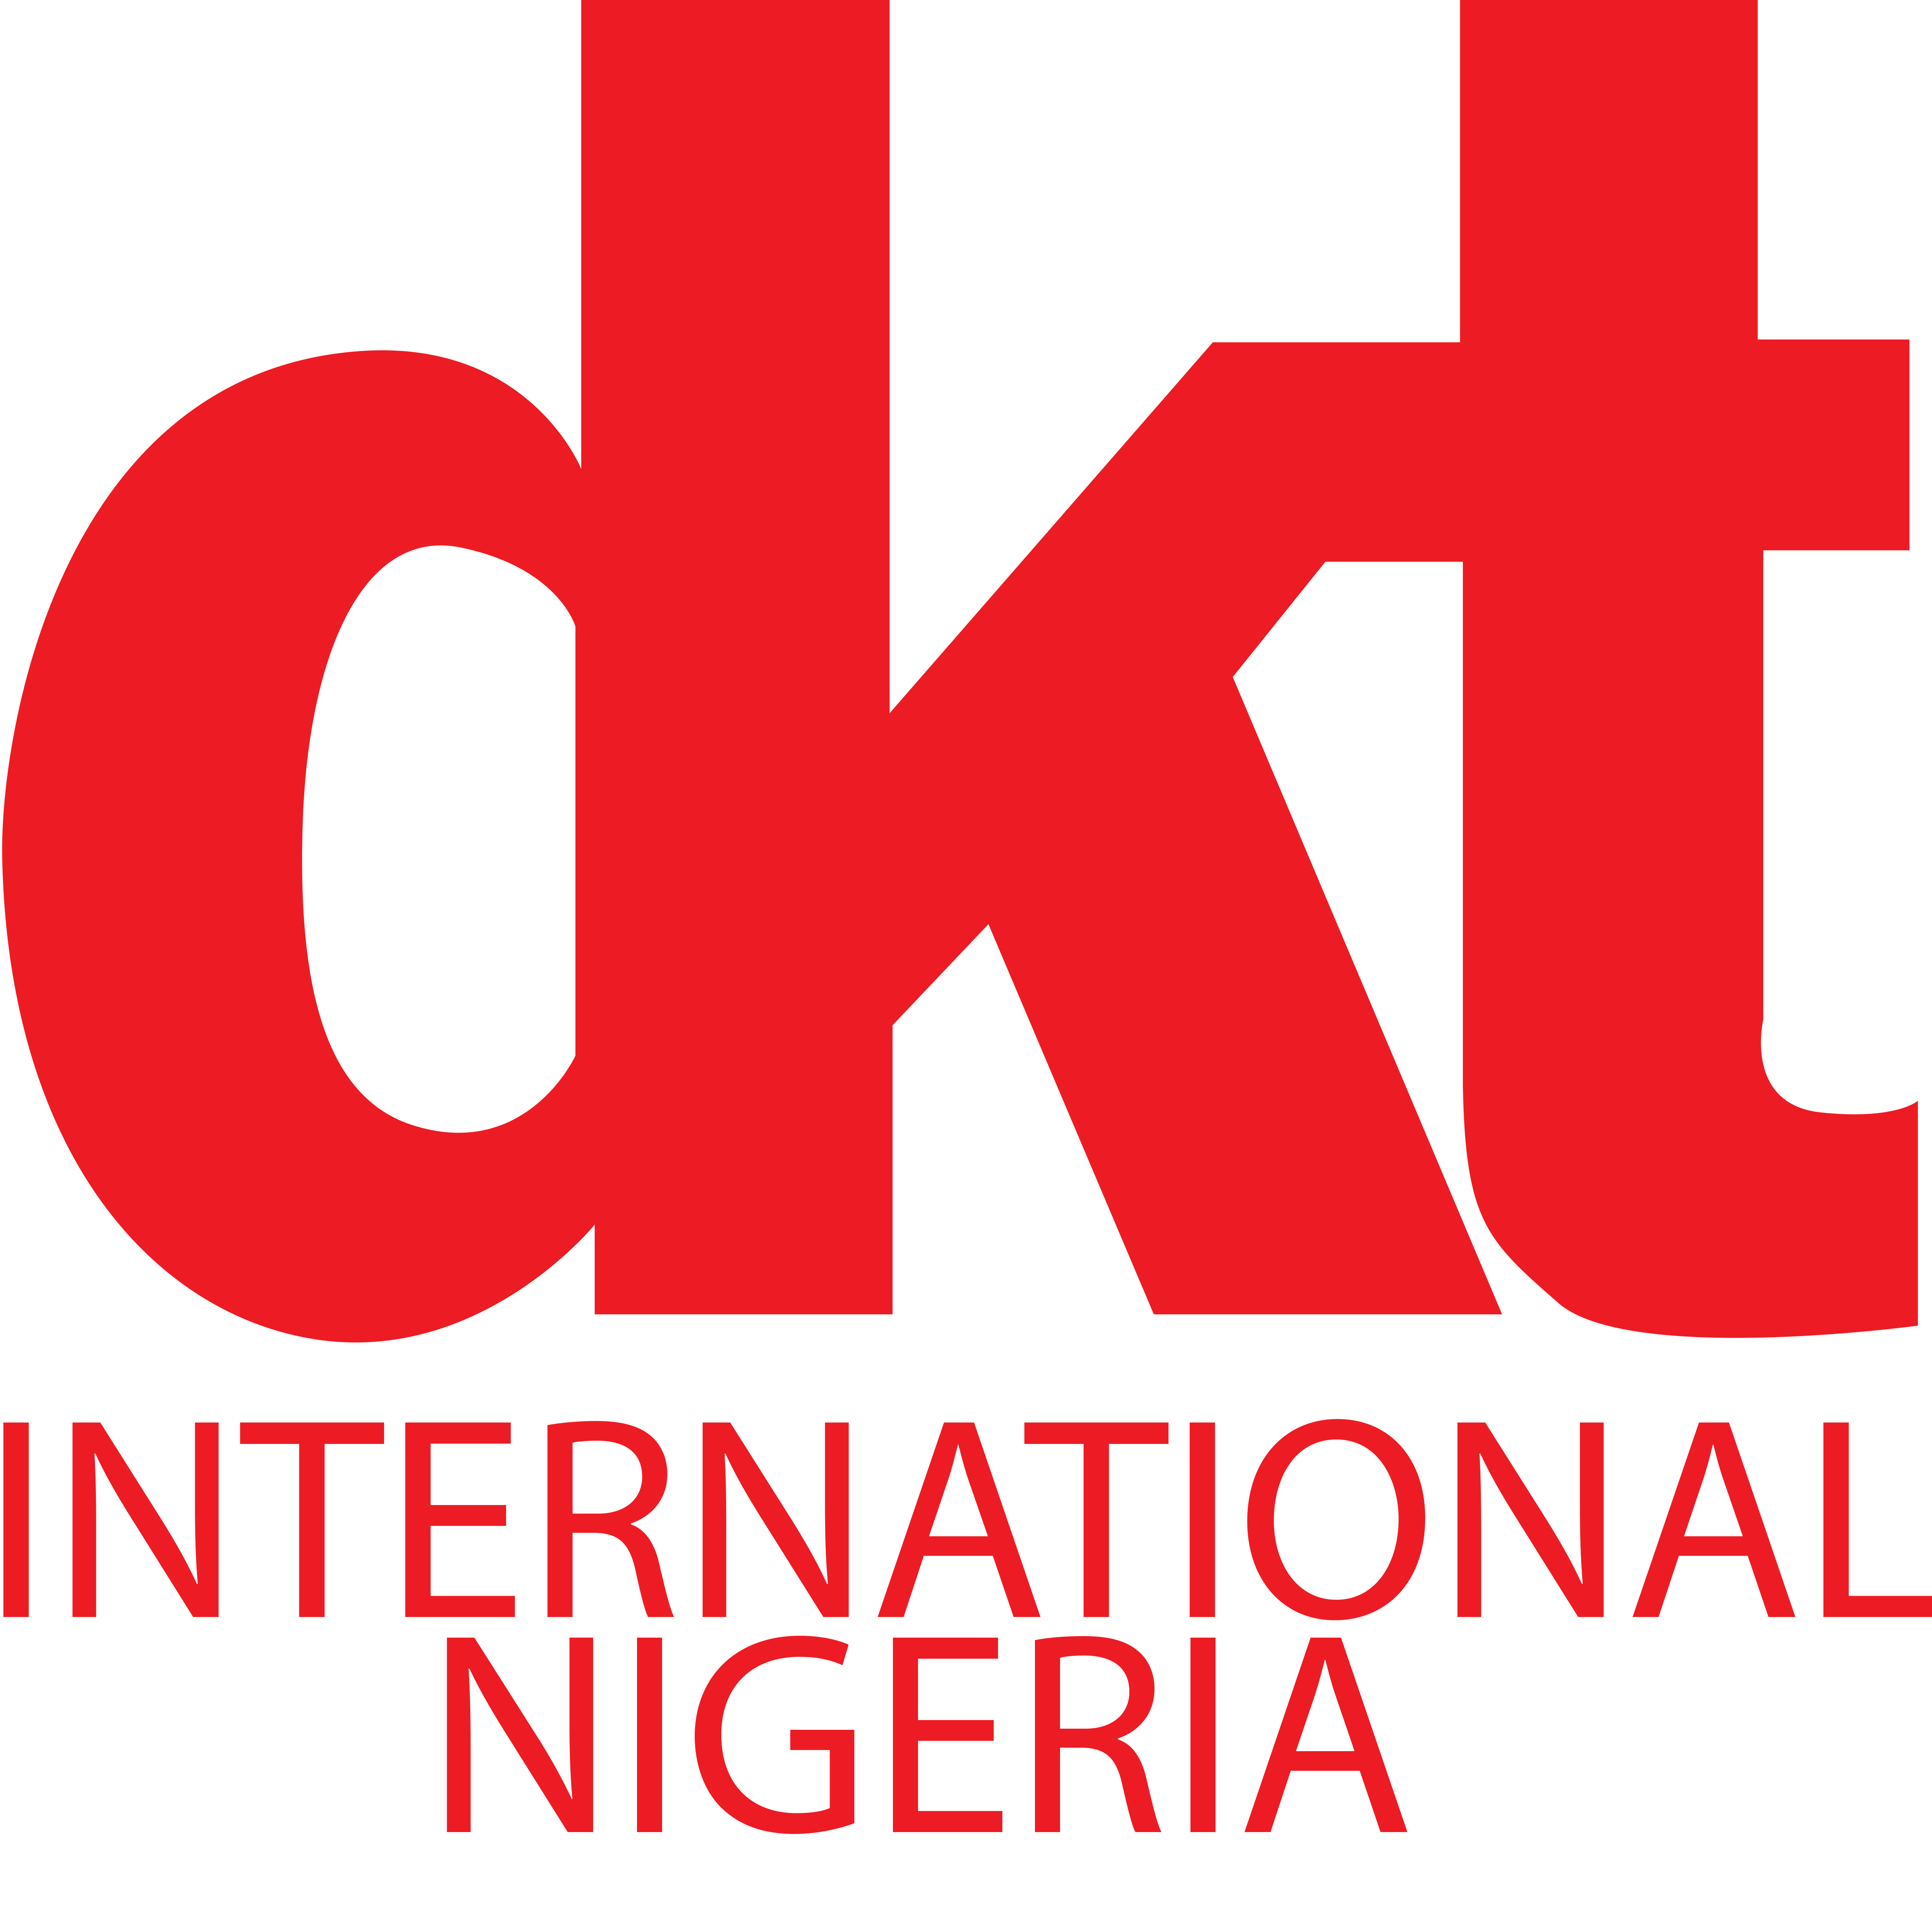 DKT Nigeria